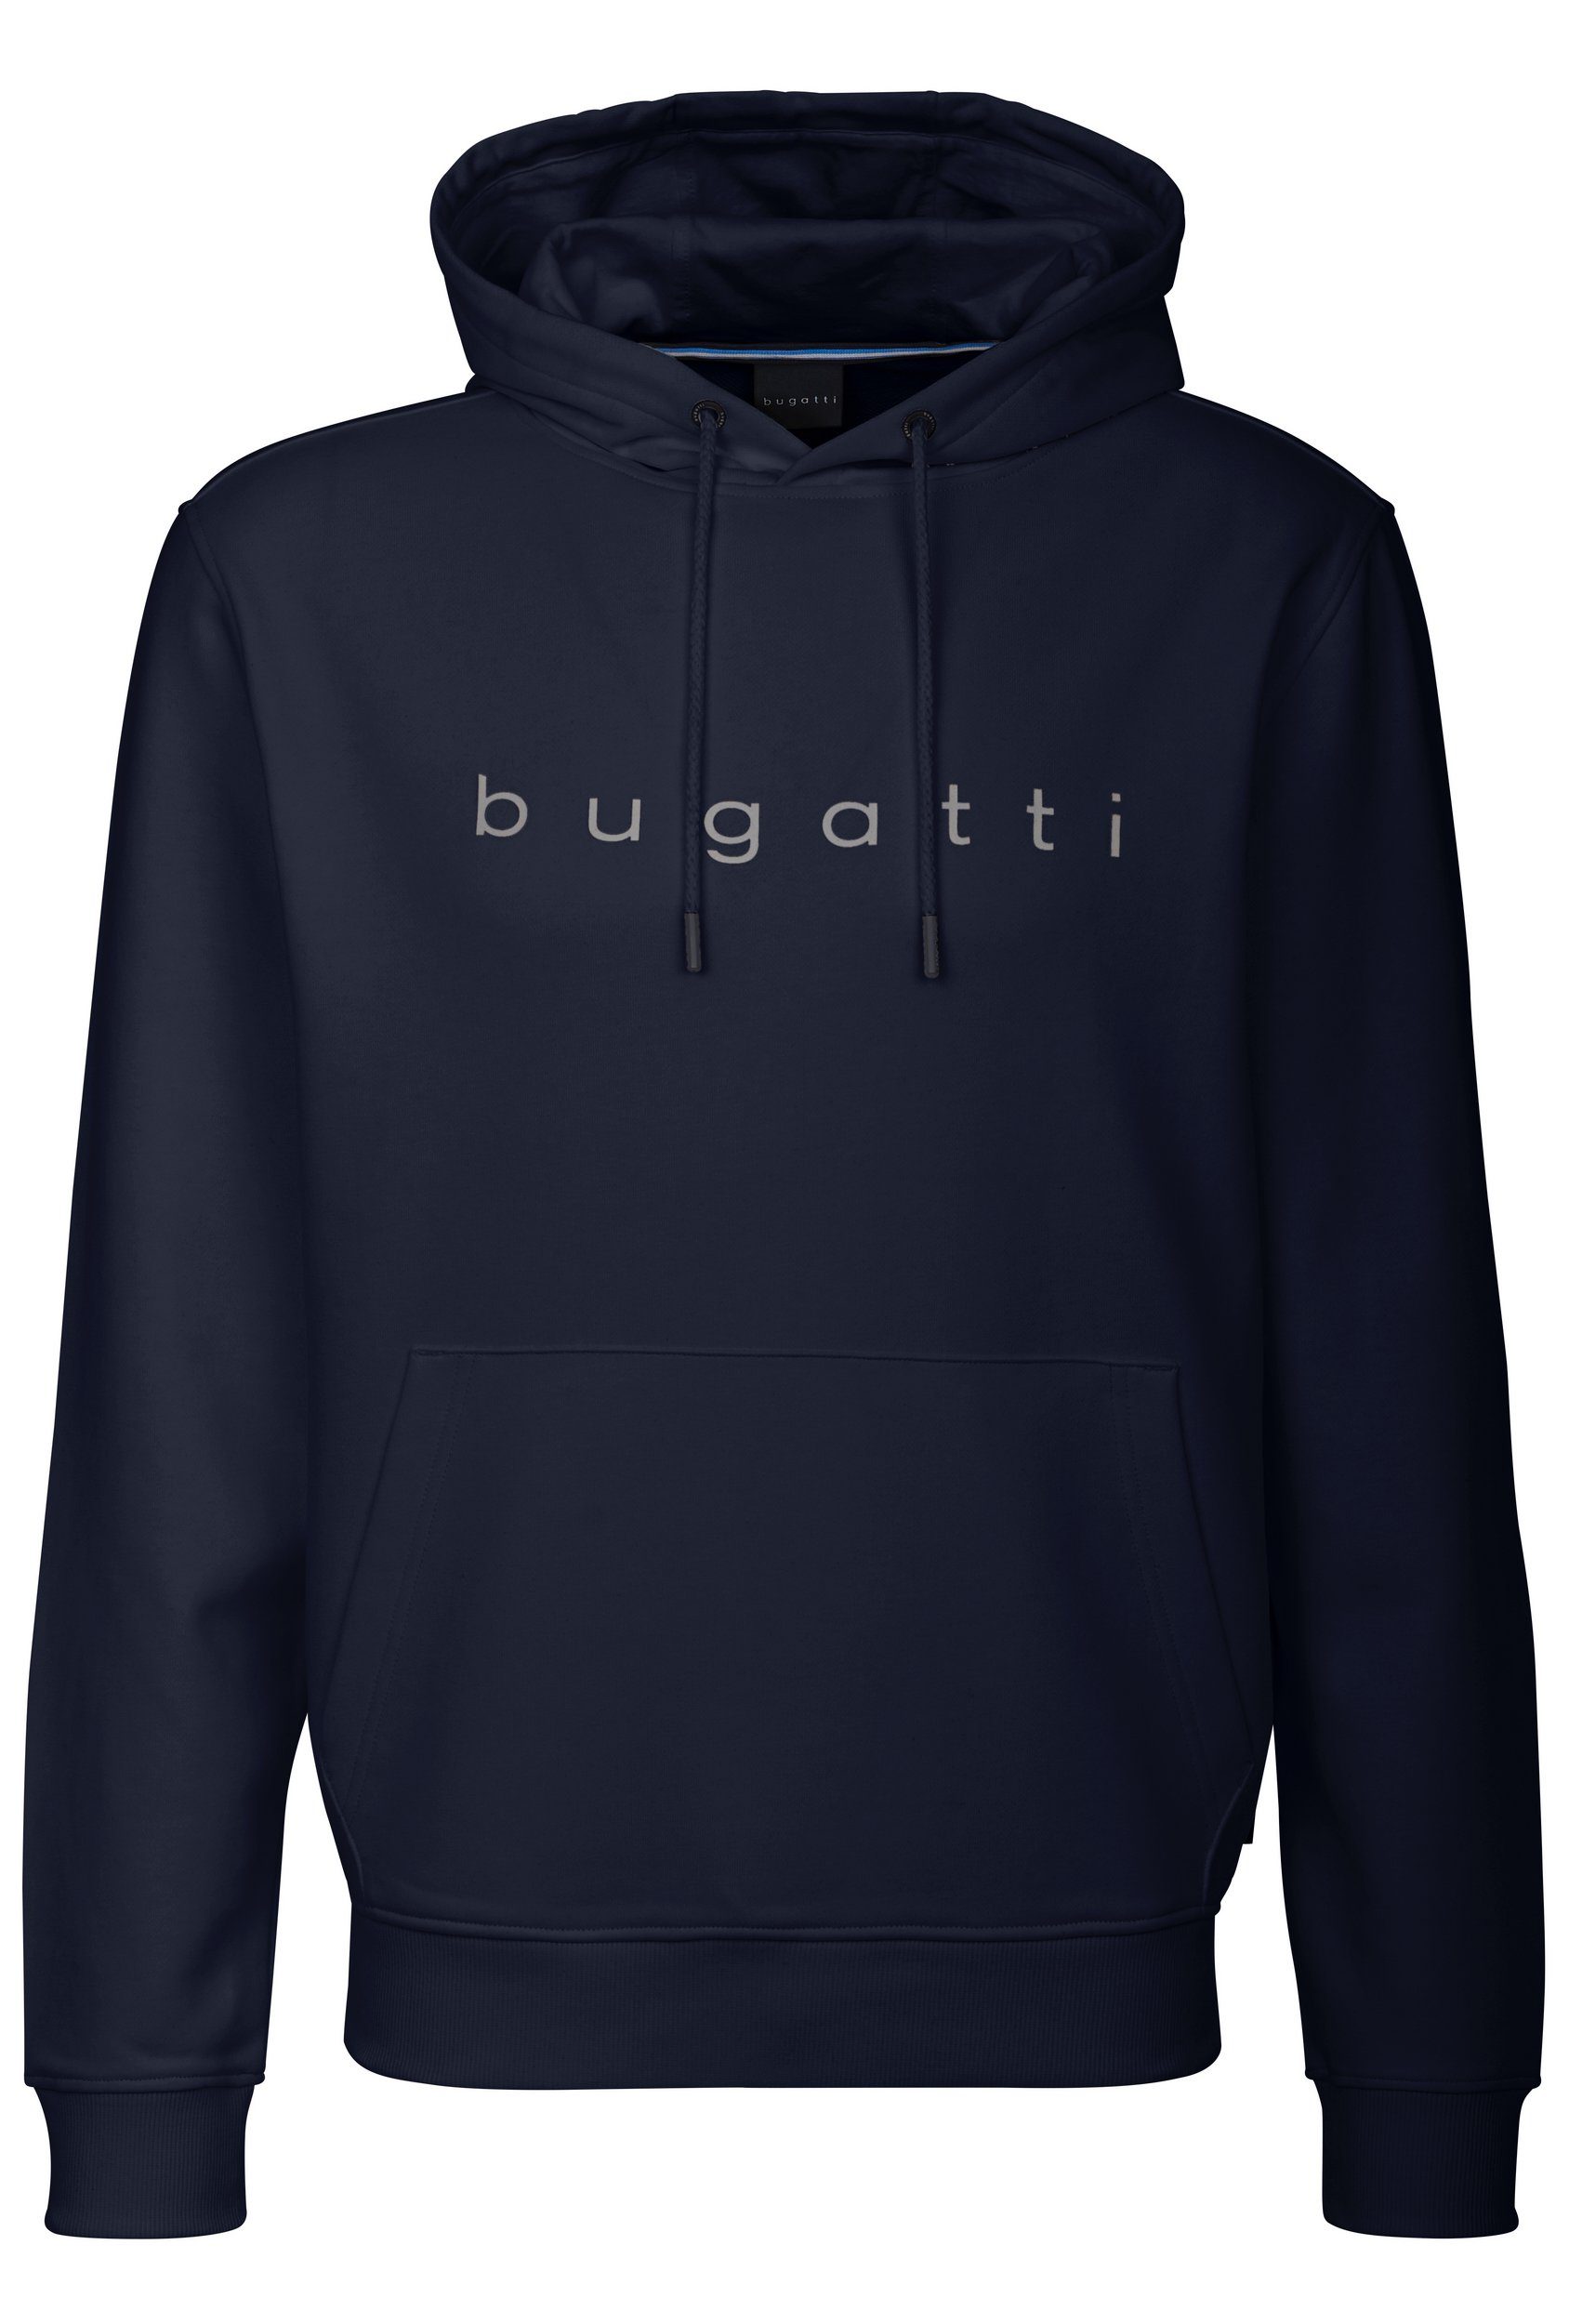 Bugatti Sweatshirt